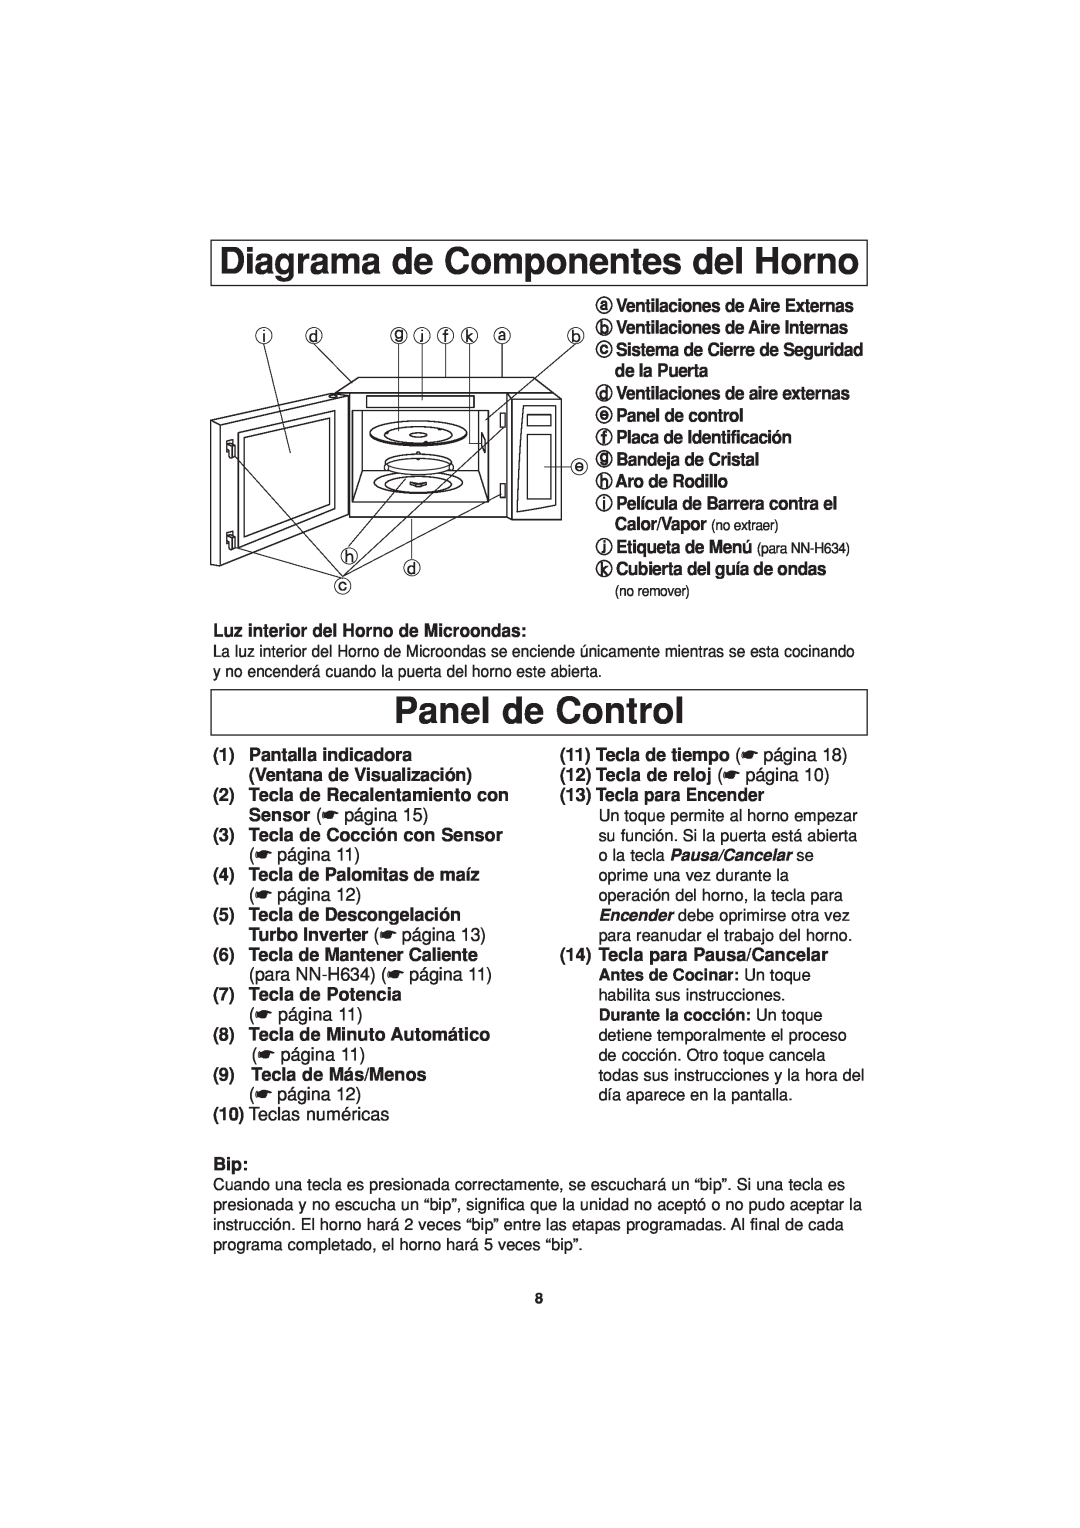 Panasonic NN-H644, NN-H634 Diagrama de Componentes del Horno, Panel de Control, Teclas numéricas 